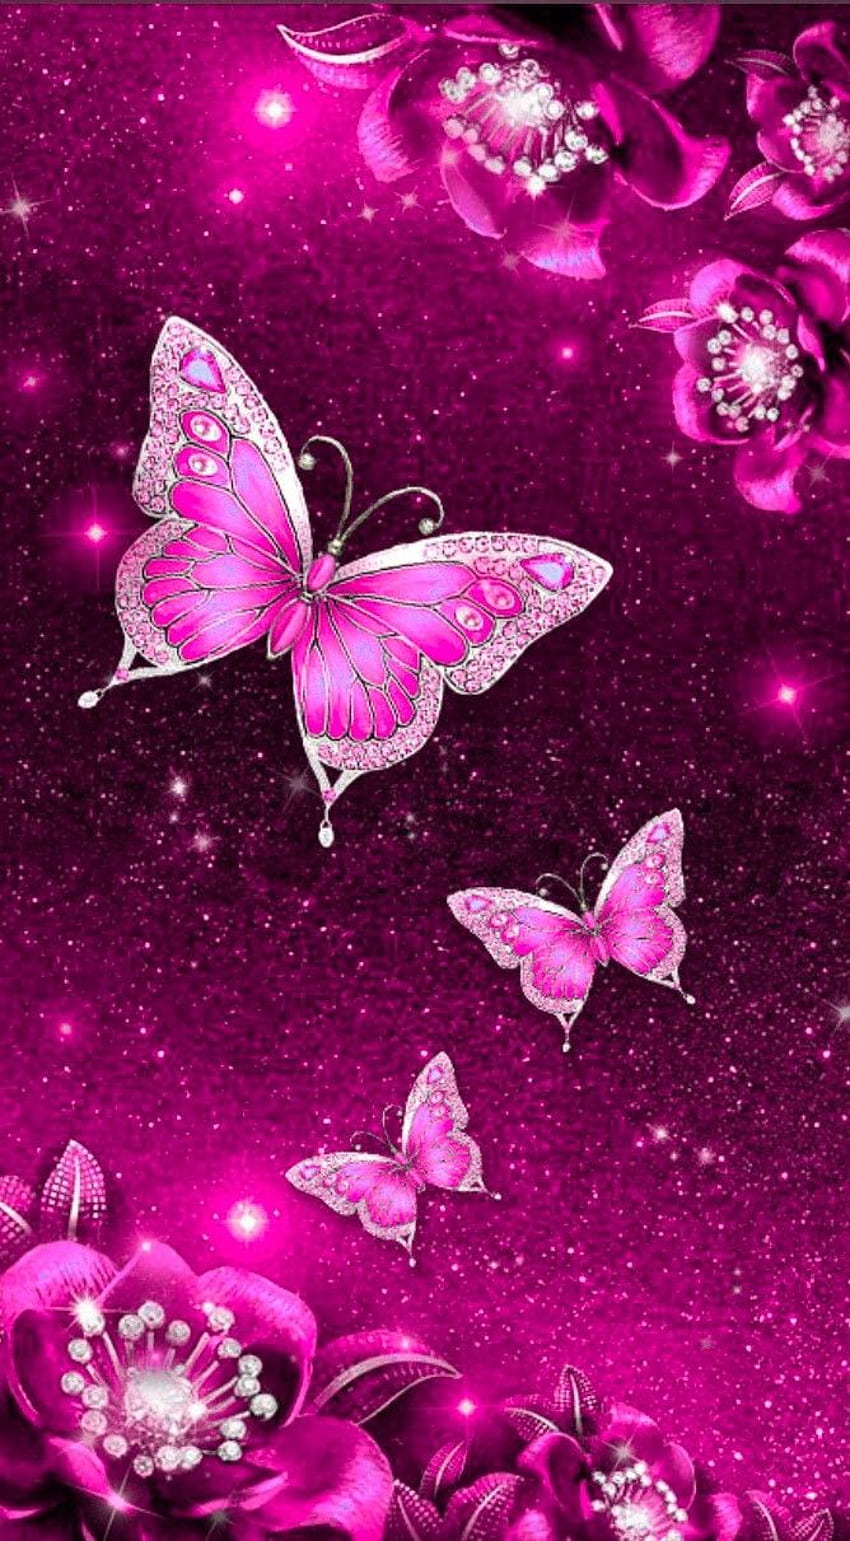 Butterfly wallpaper Vector Art Stock Images  Depositphotos